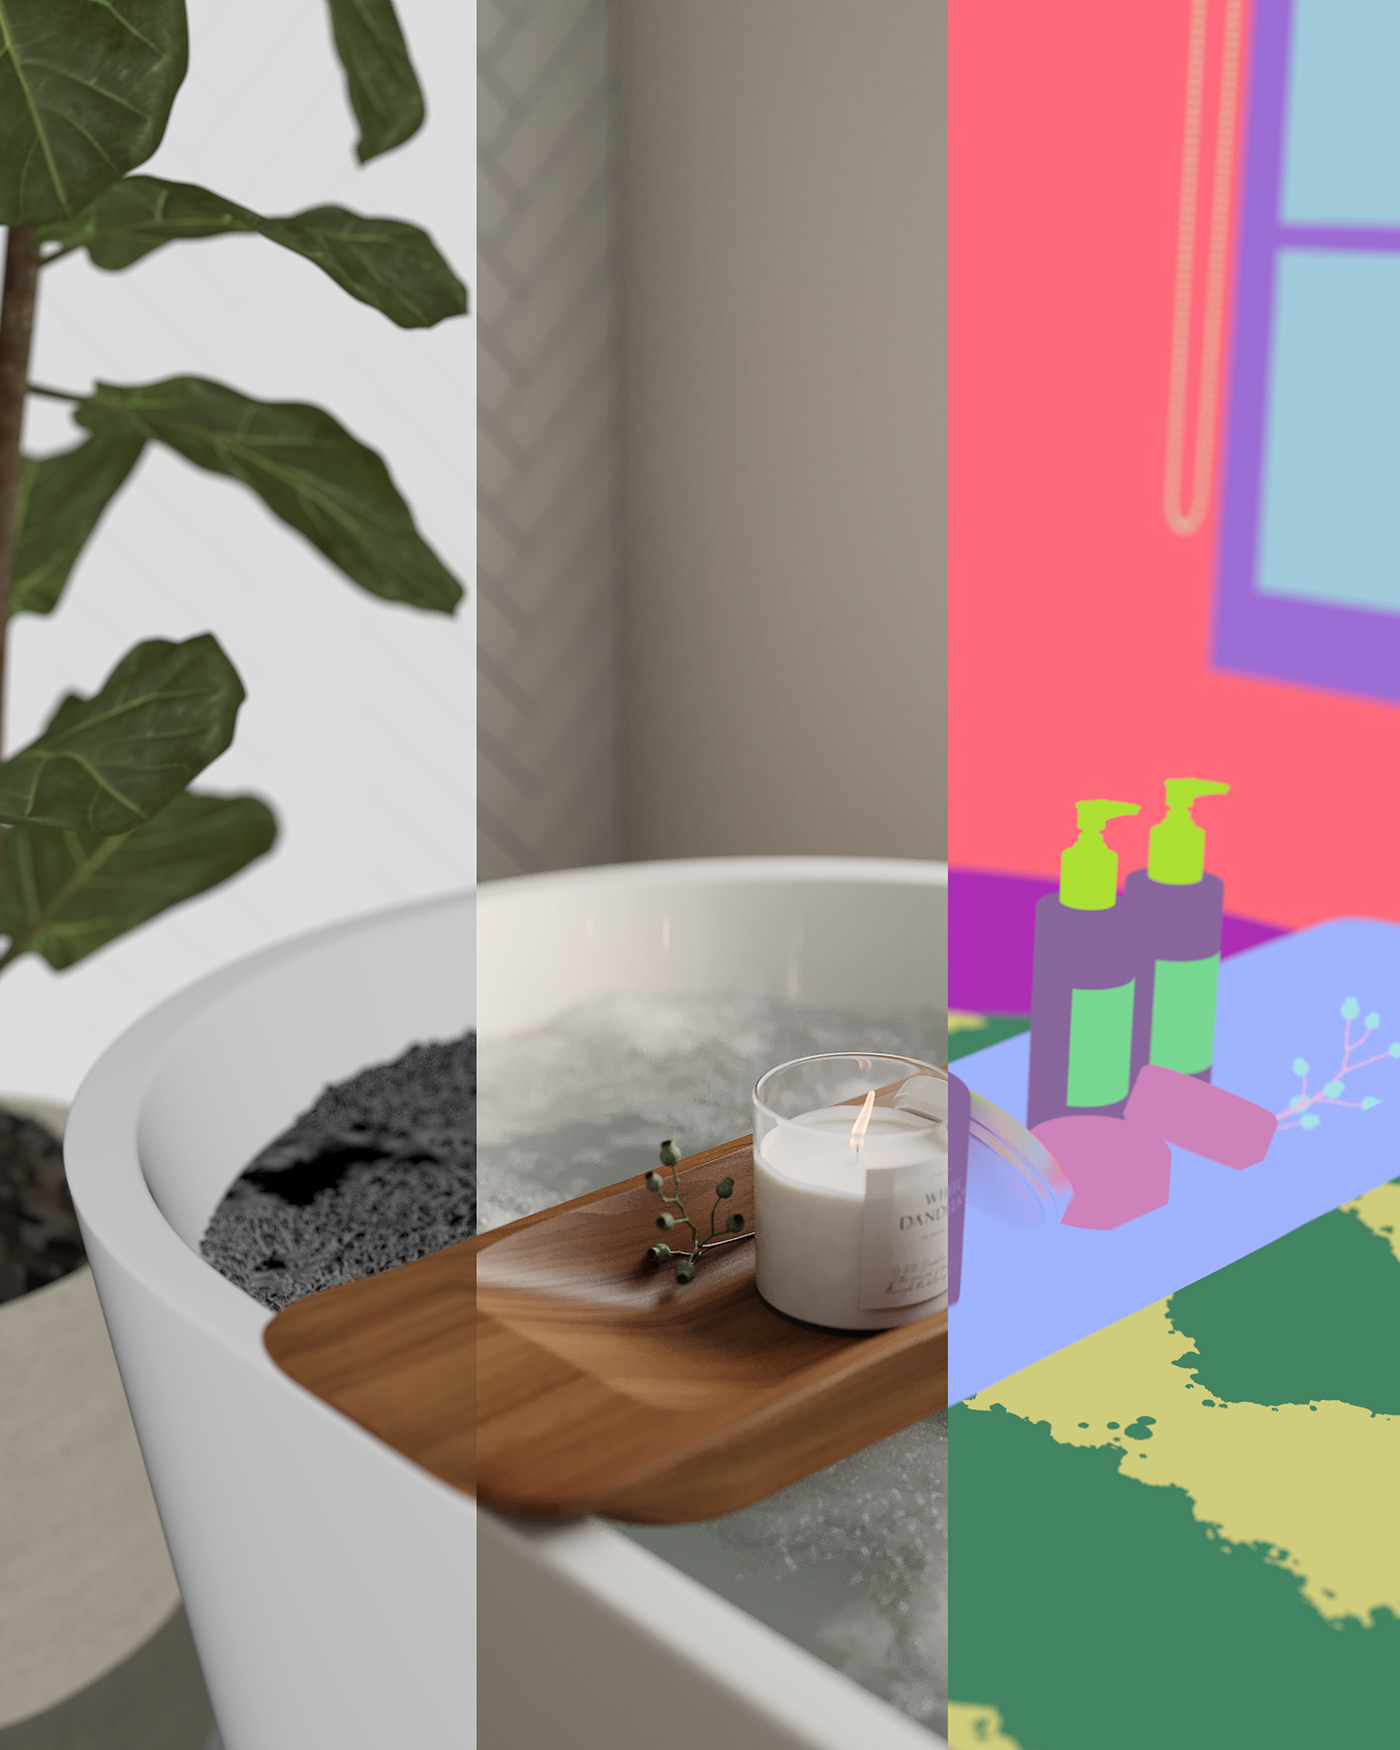 3dsmax corona render  interiordesign archviz bathroom